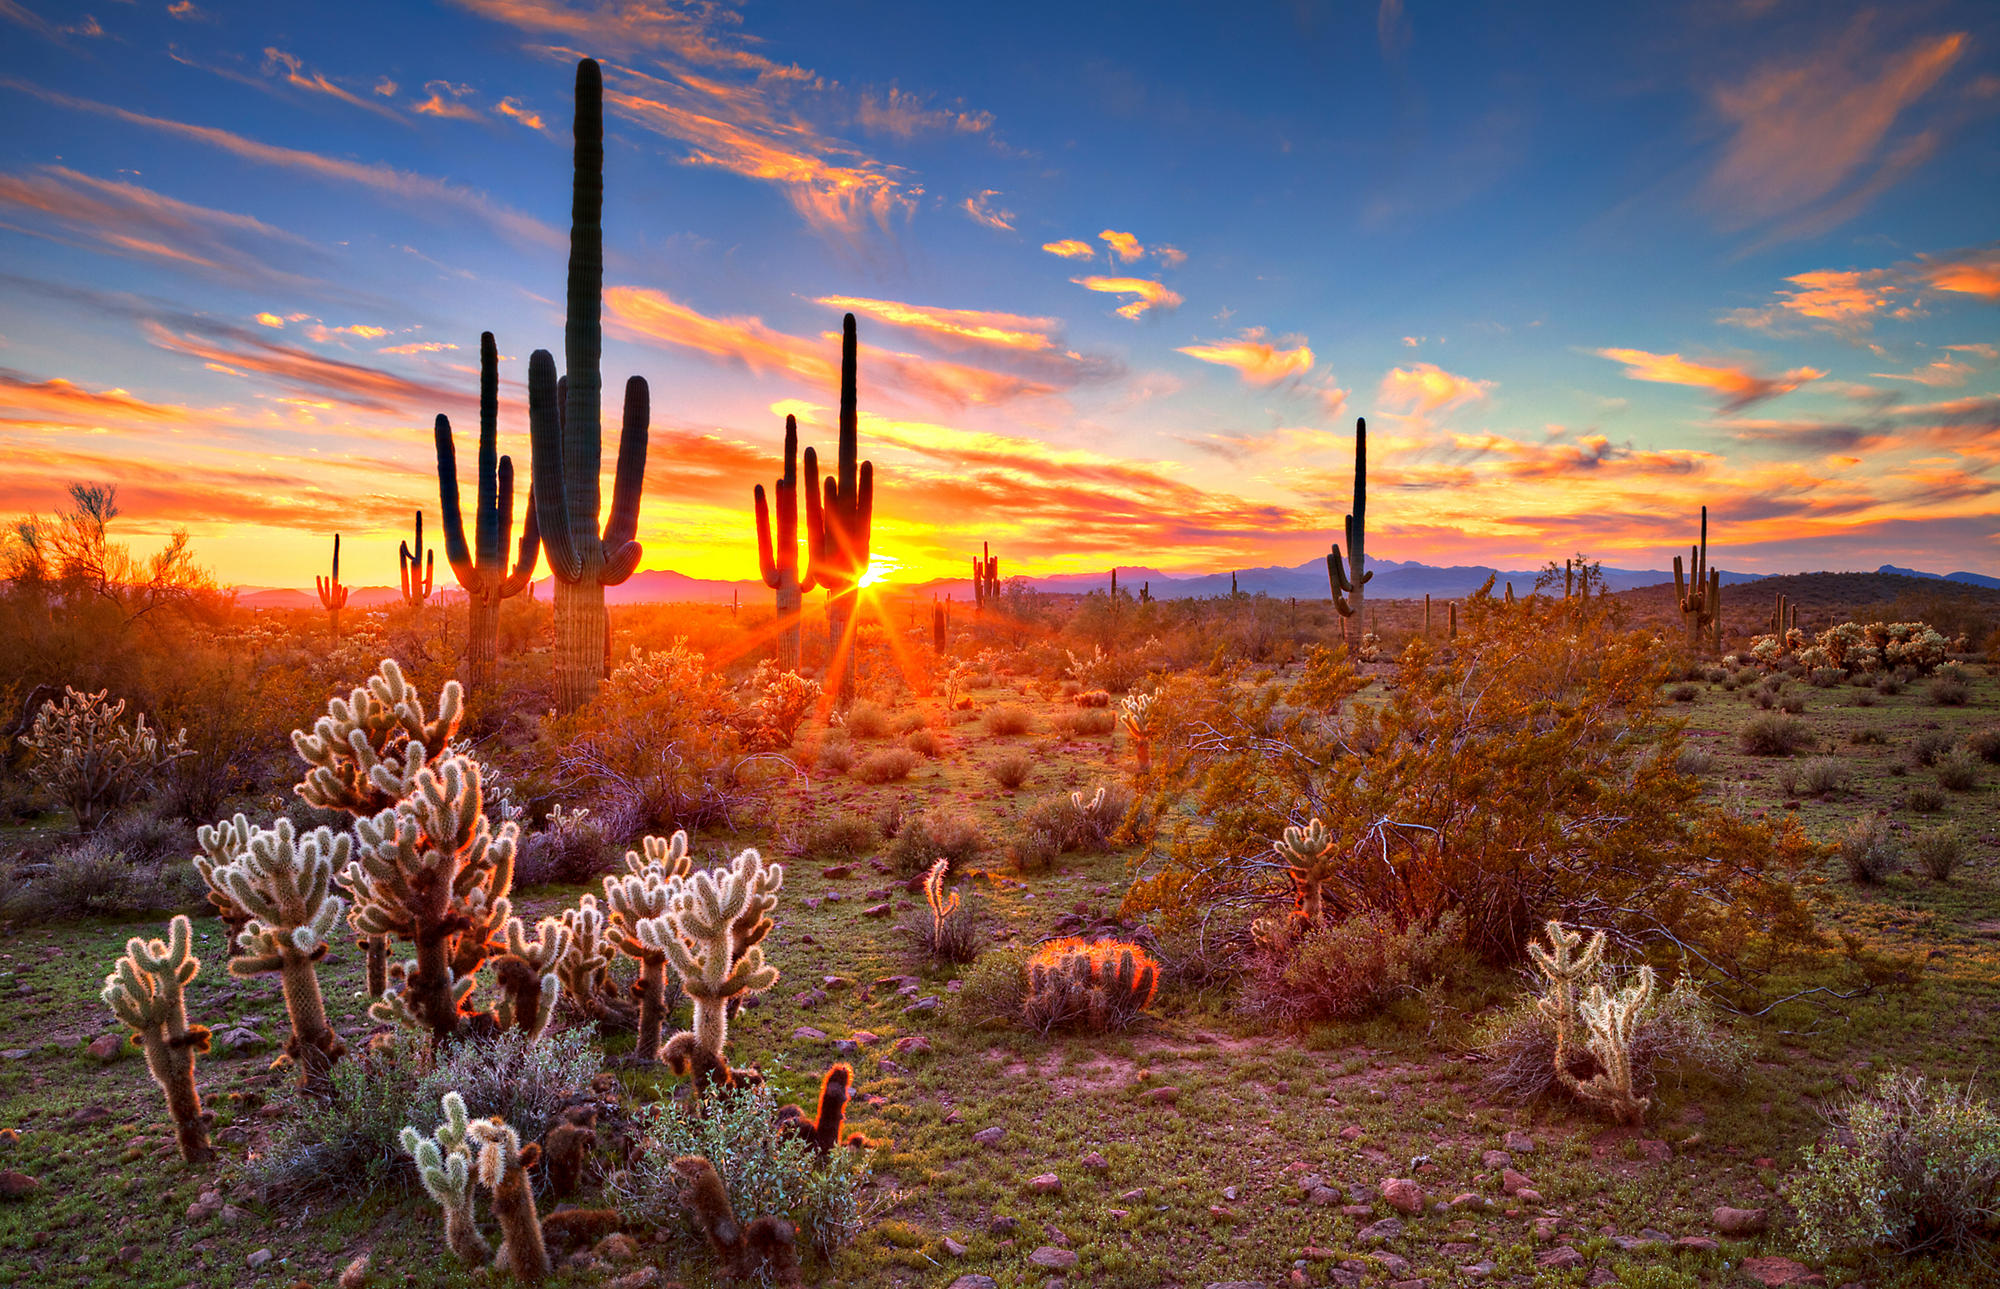 Arizona Sunset at the Sonoran Desert view of Cactus